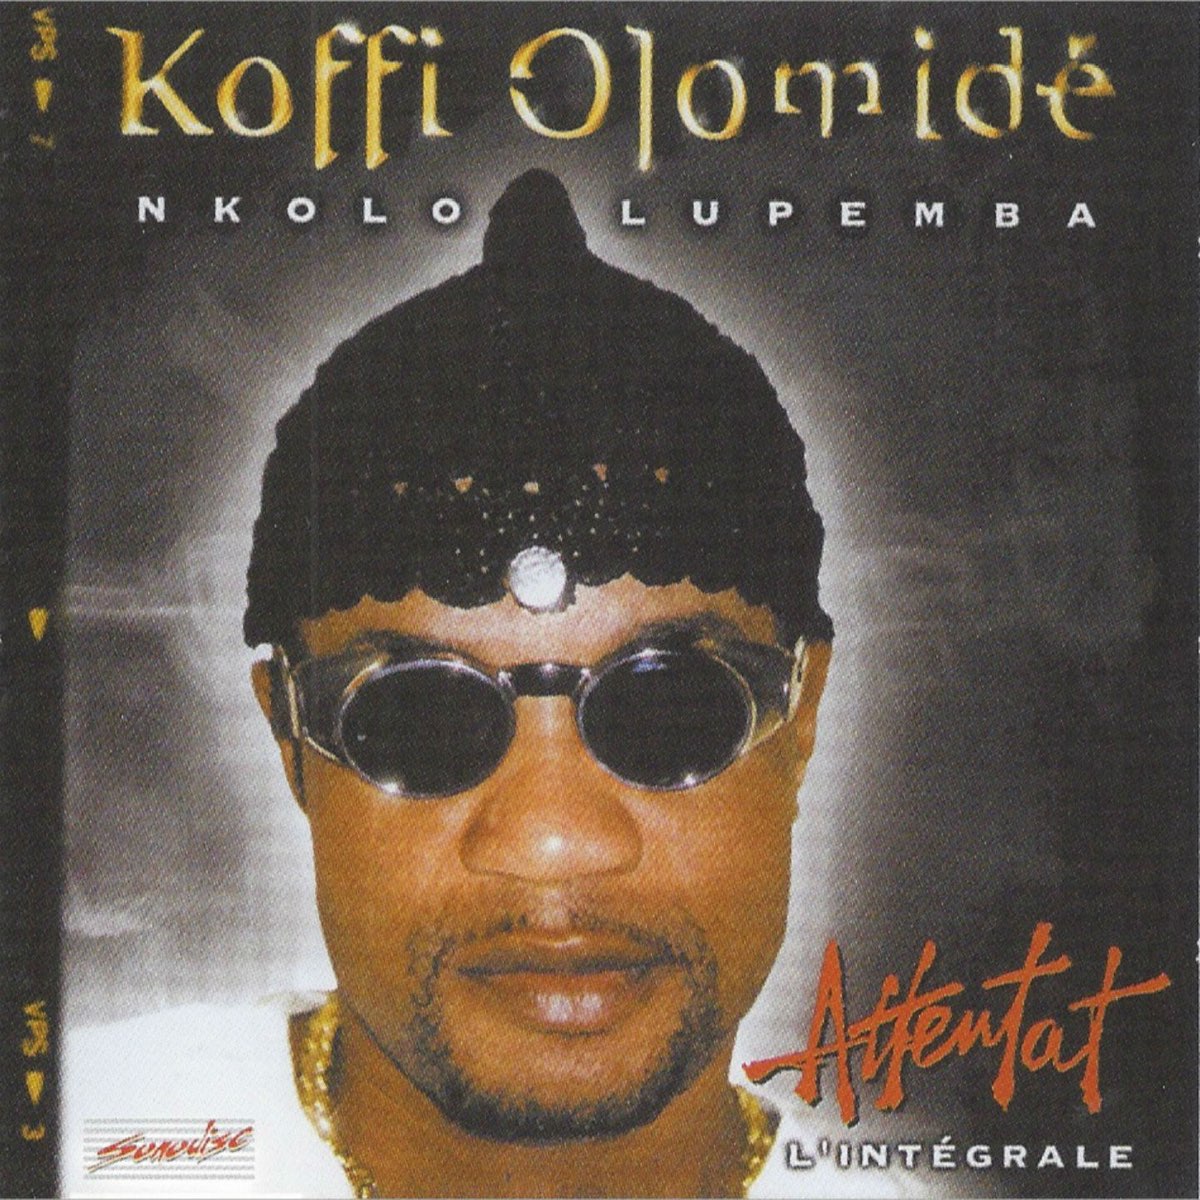 Attentat (Nkolo Lupemba) [L'intégrale] - Album by Koffi Olomidé - Apple  Music